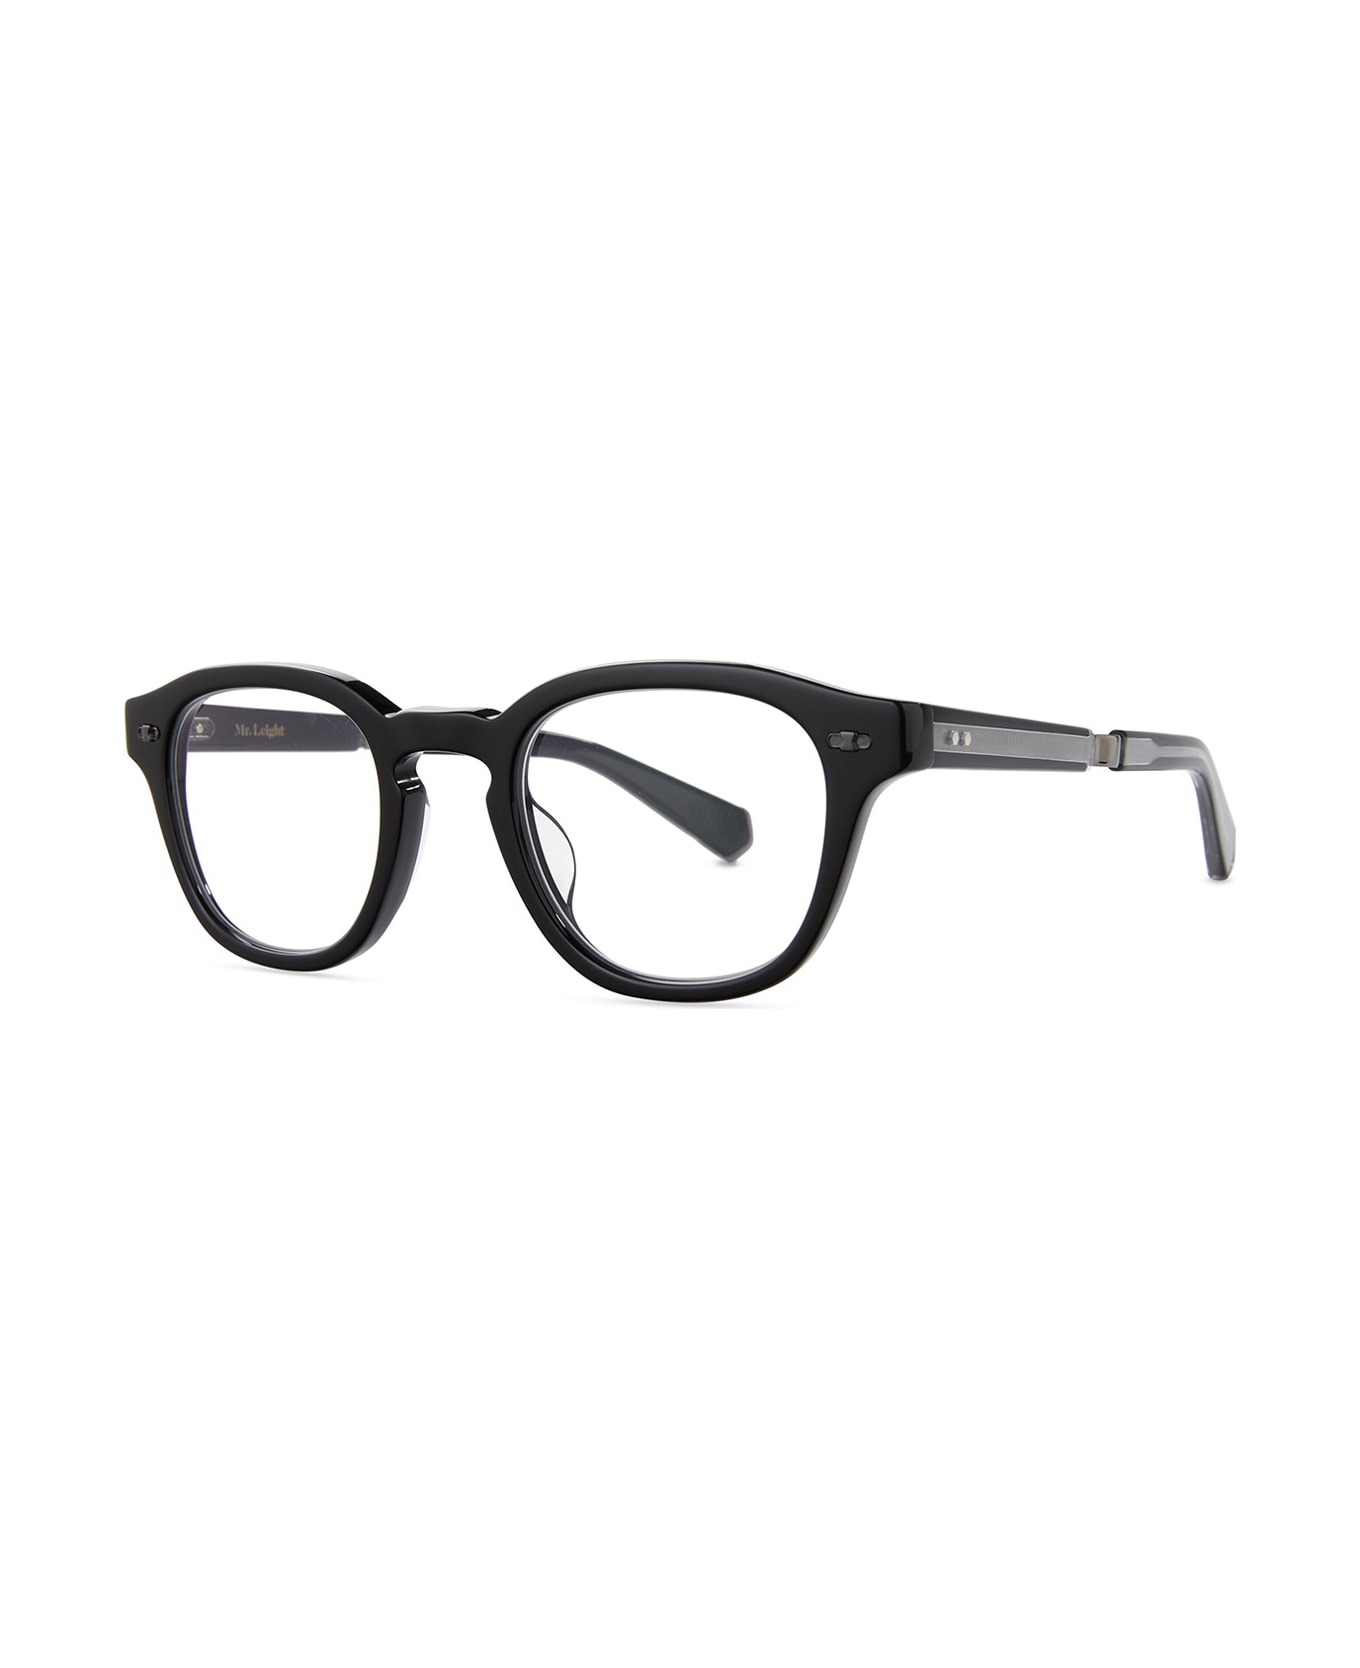 Mr. Leight James C Black-gunmetal Glasses - Black-Gunmetal